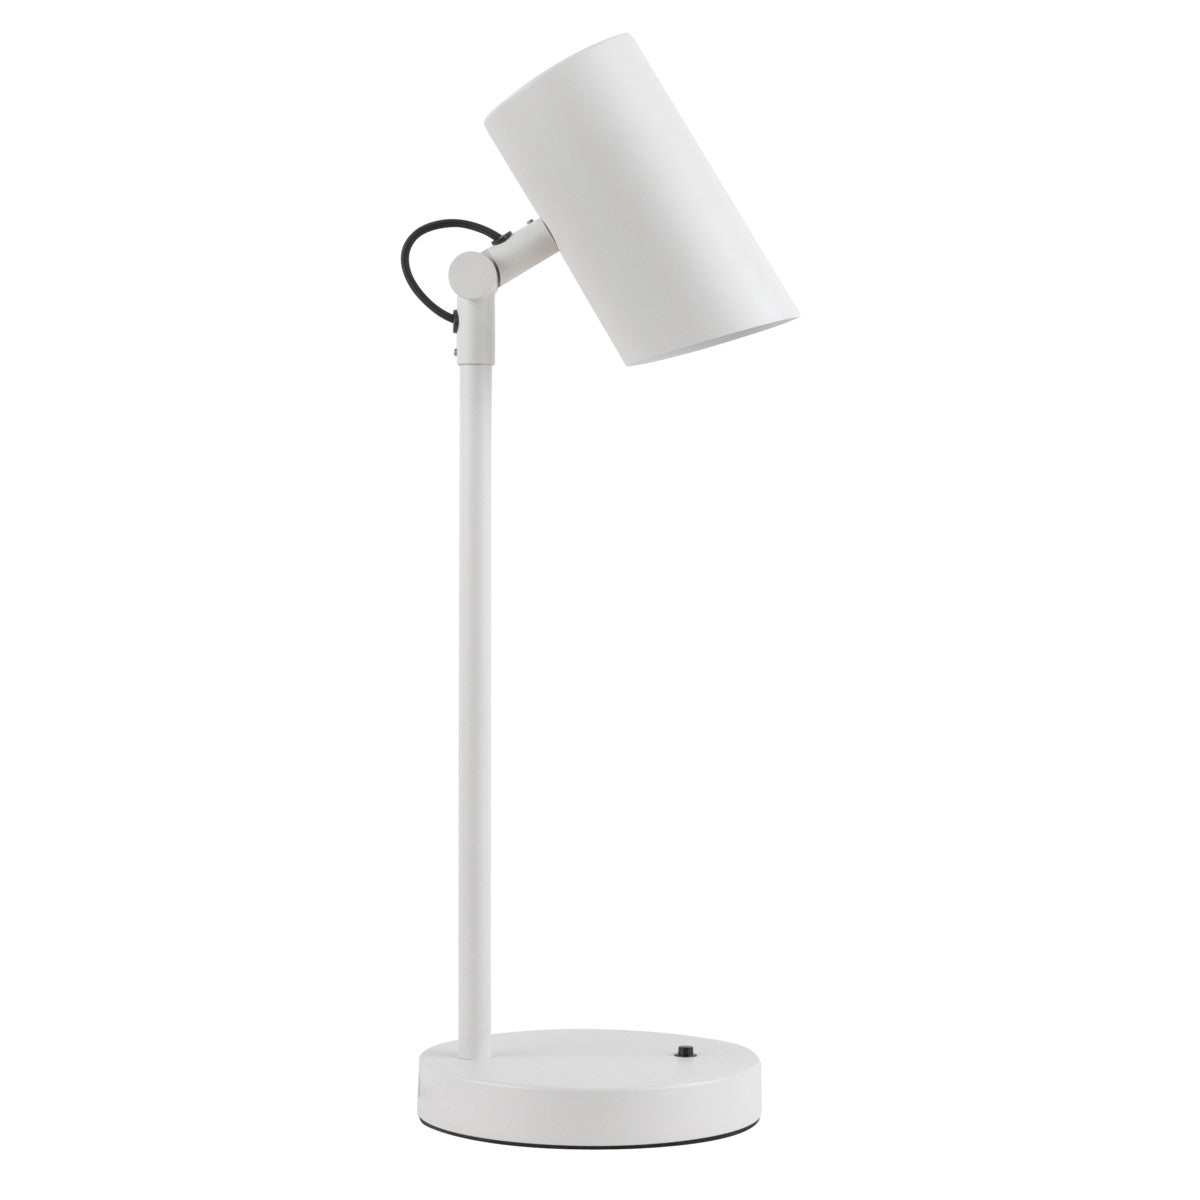 Kanlux AGZAR Adjustable Table Desk Lamp E14 SES Base Mains